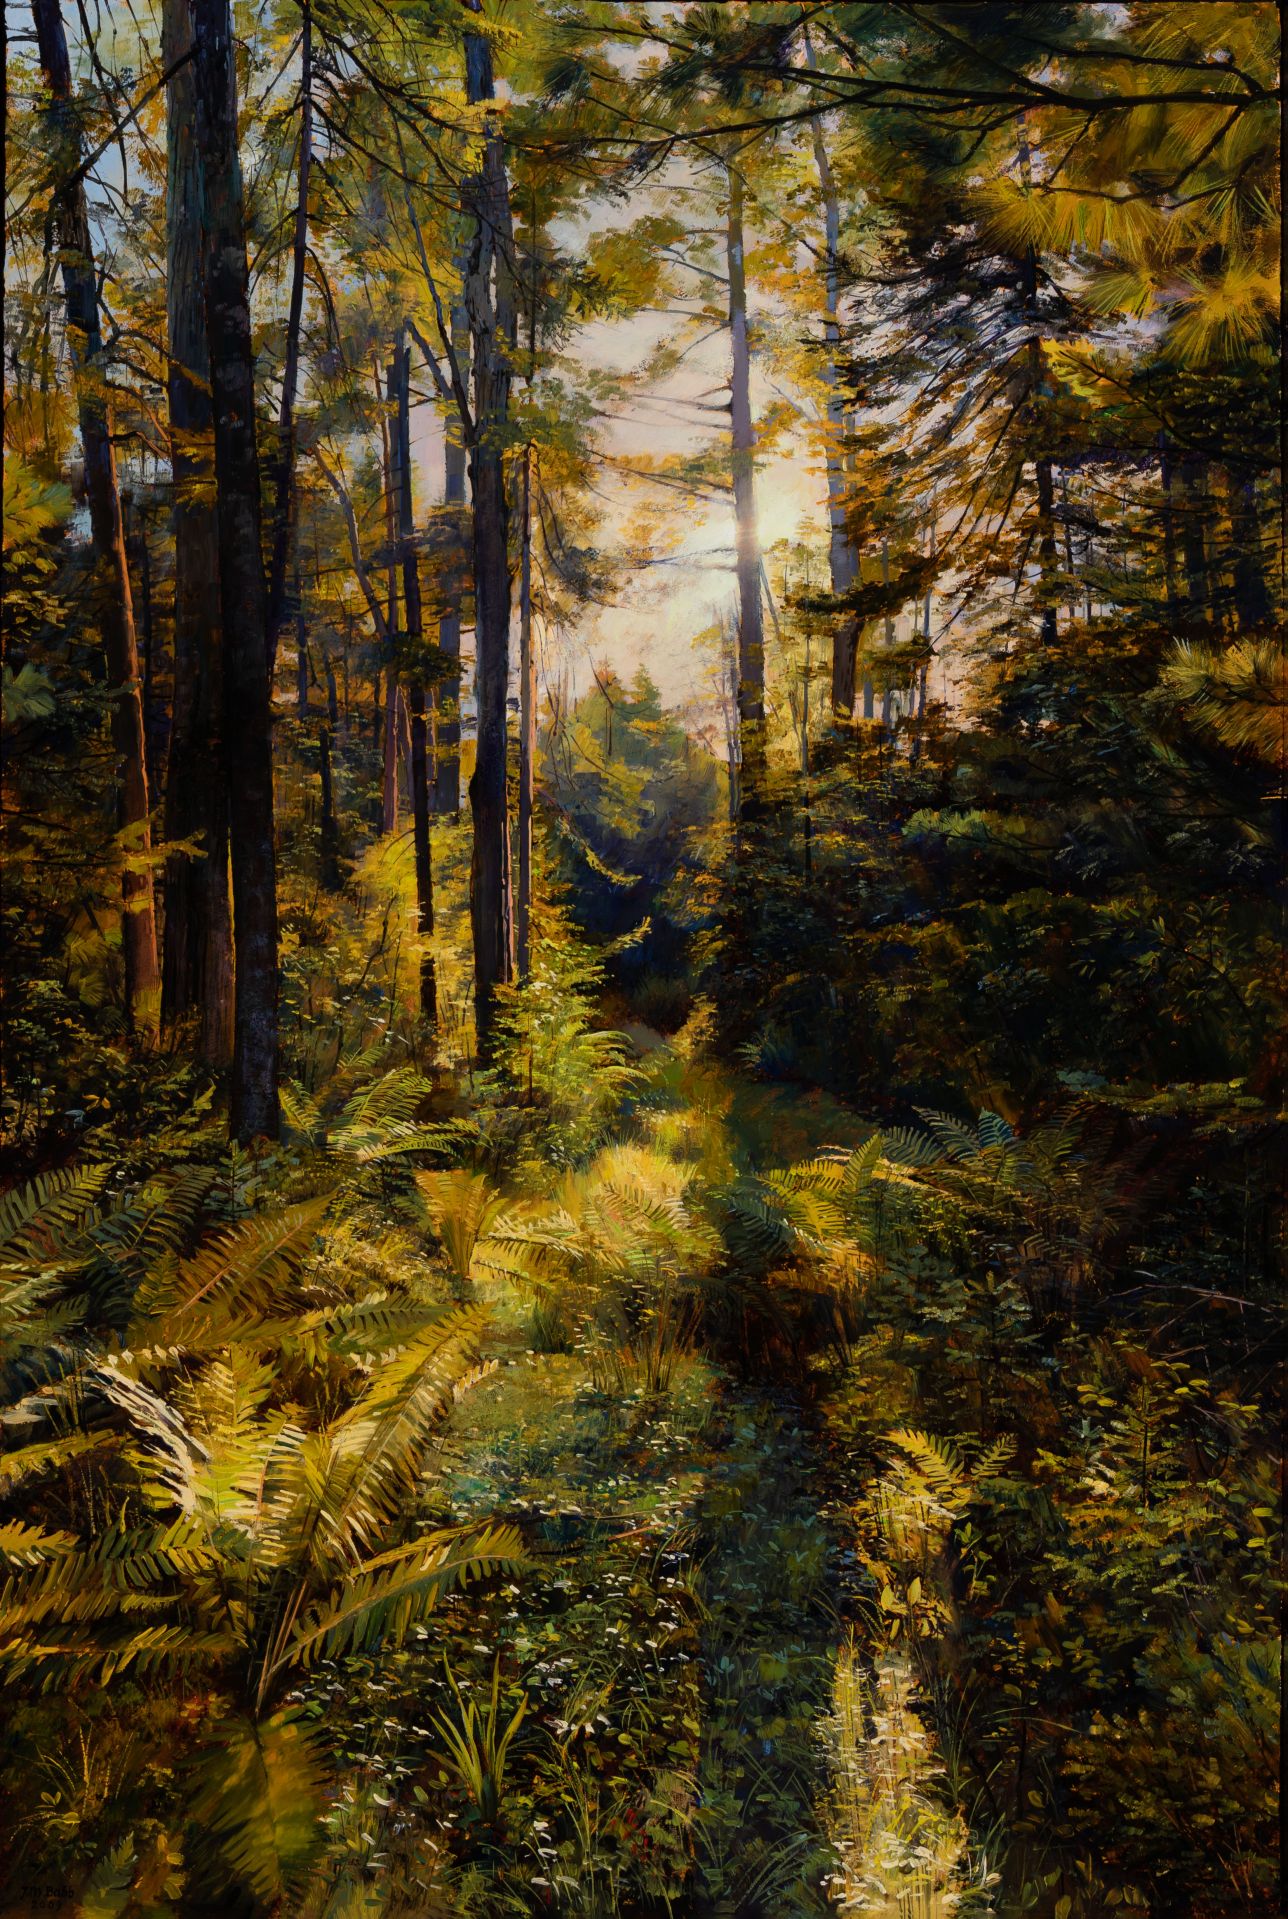 Joel Babb, Carl’s Path, 2009, oil on canvas, 2020.1.1